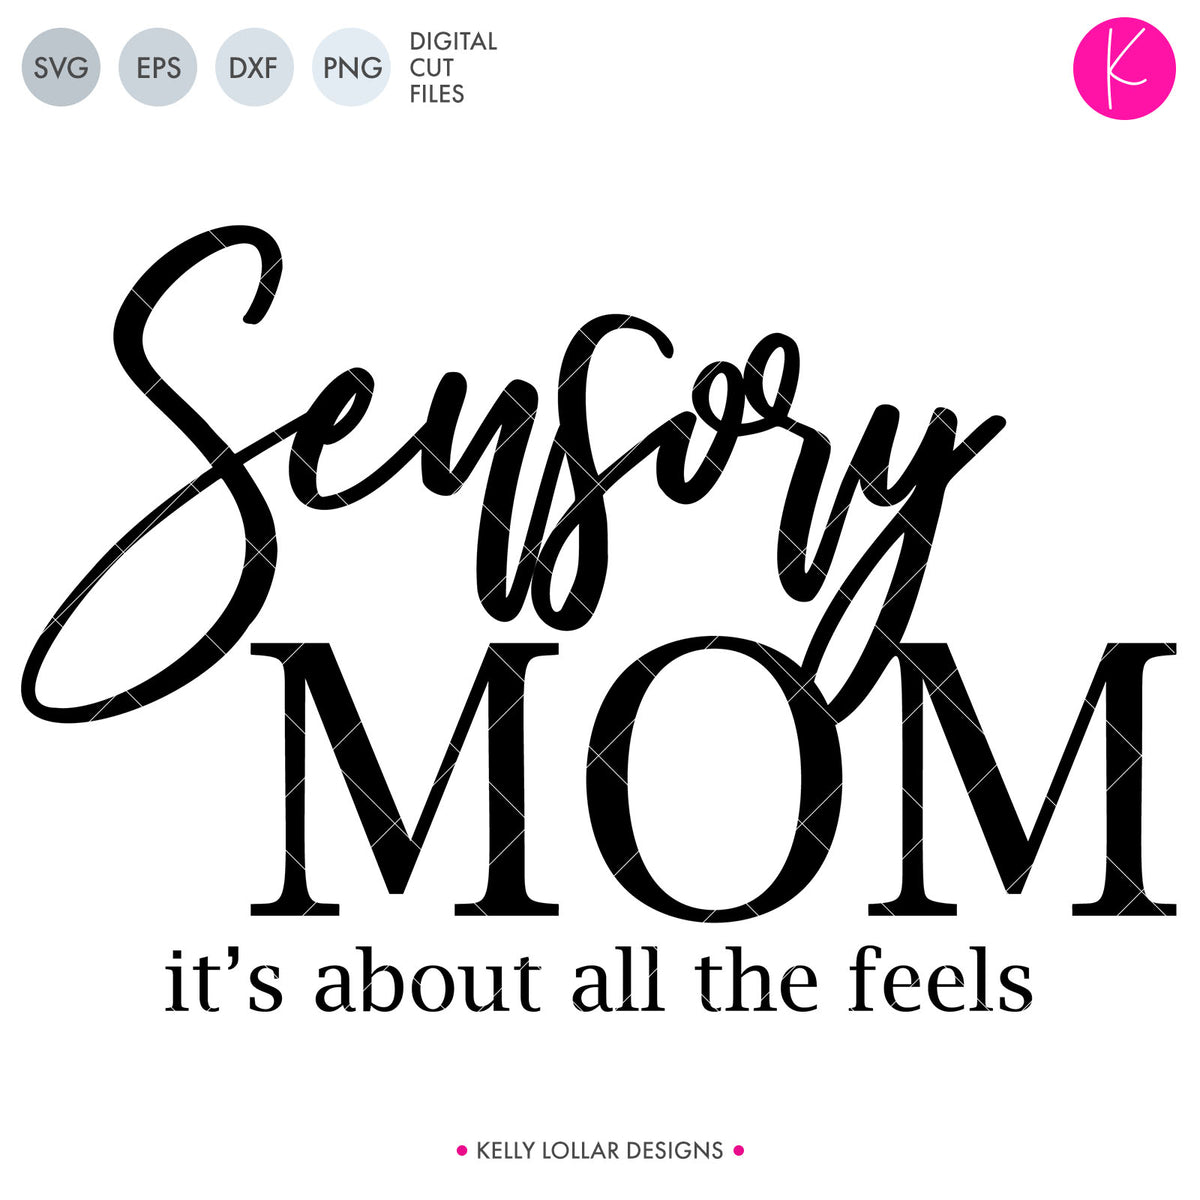 Sensory Mom | SVG DXF EPS PNG Cut Files